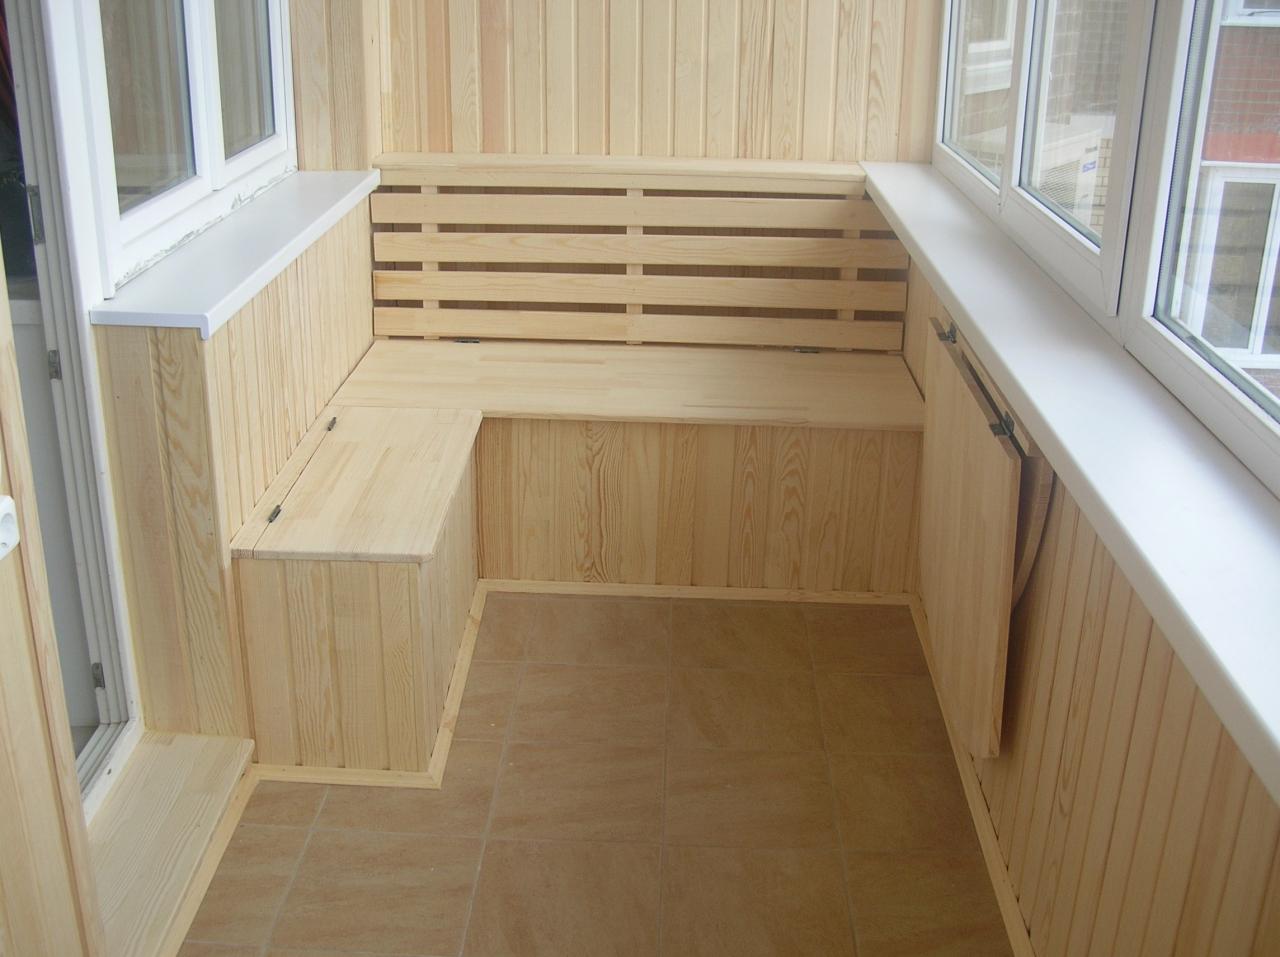 Деревянный шкаф на балкон фото